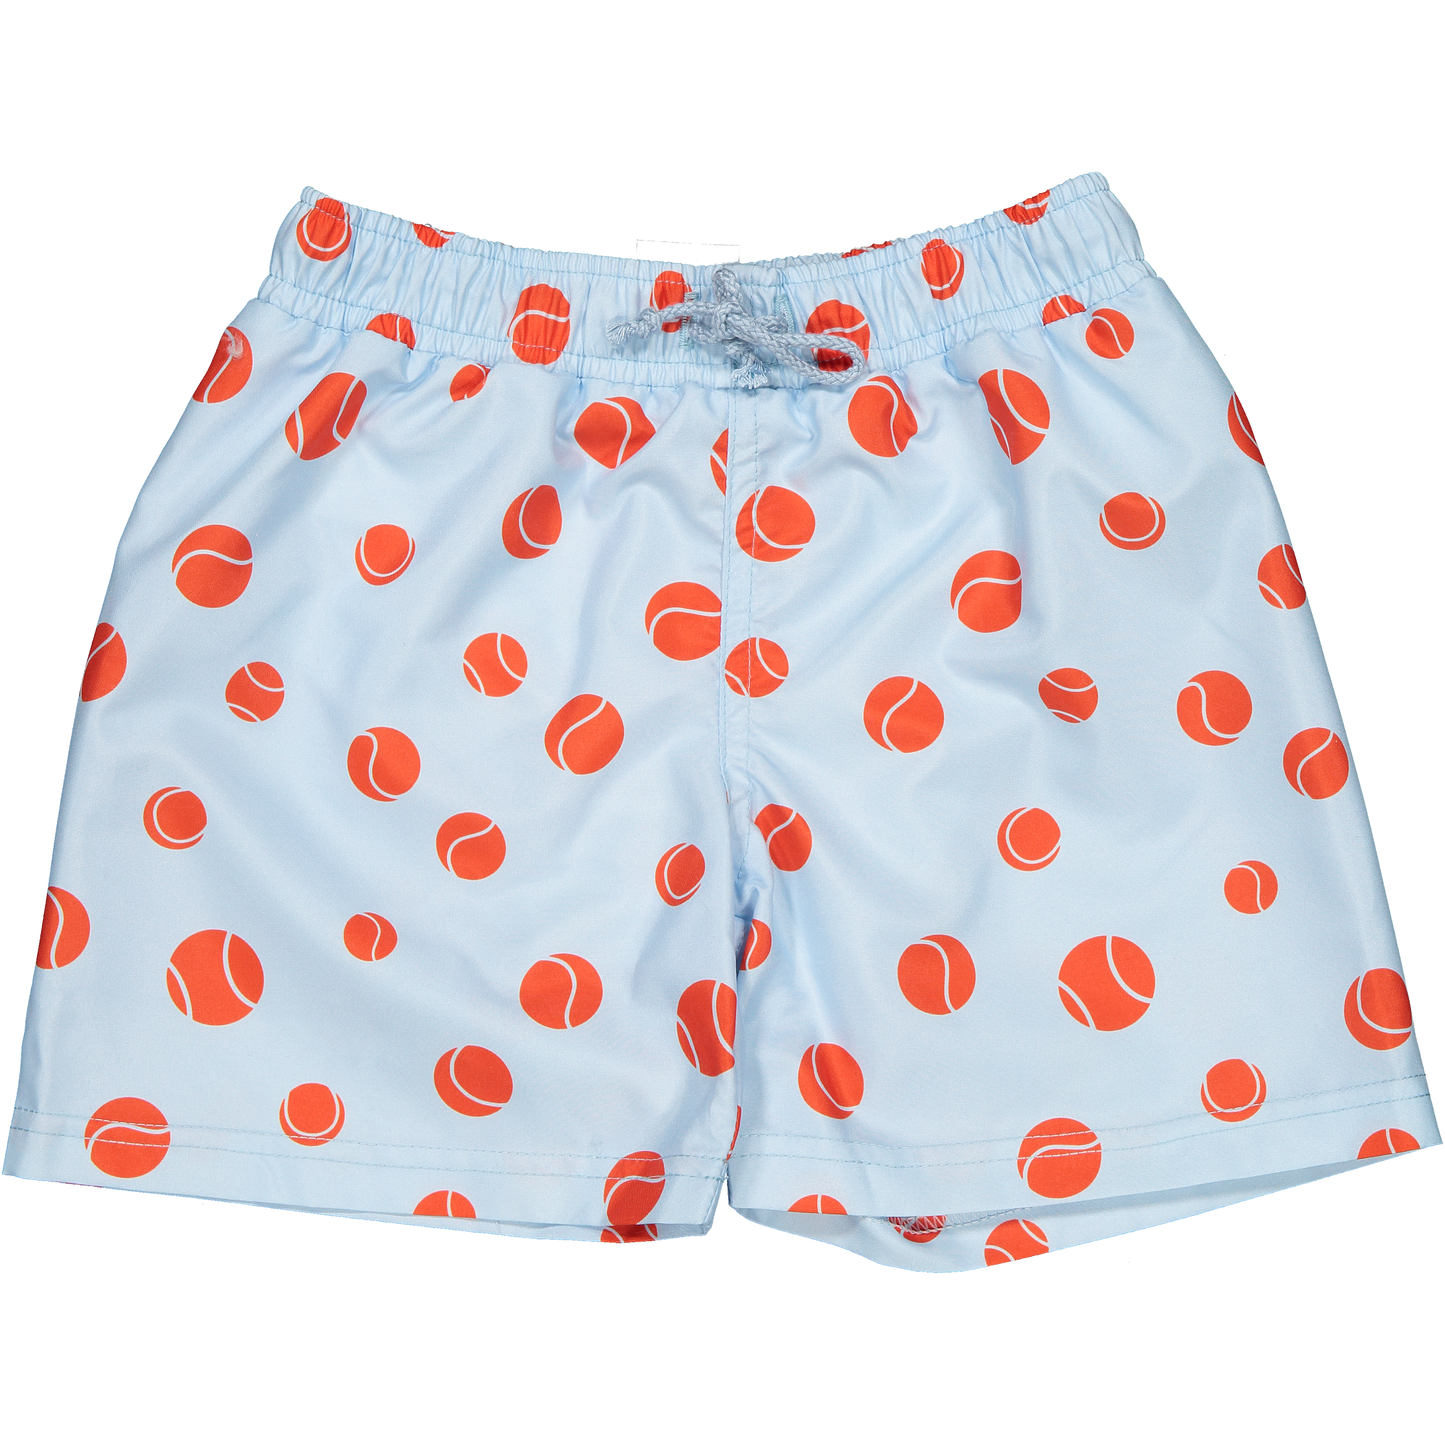 Pale blue swim shorts for kids with orange tennis ball print - Adora